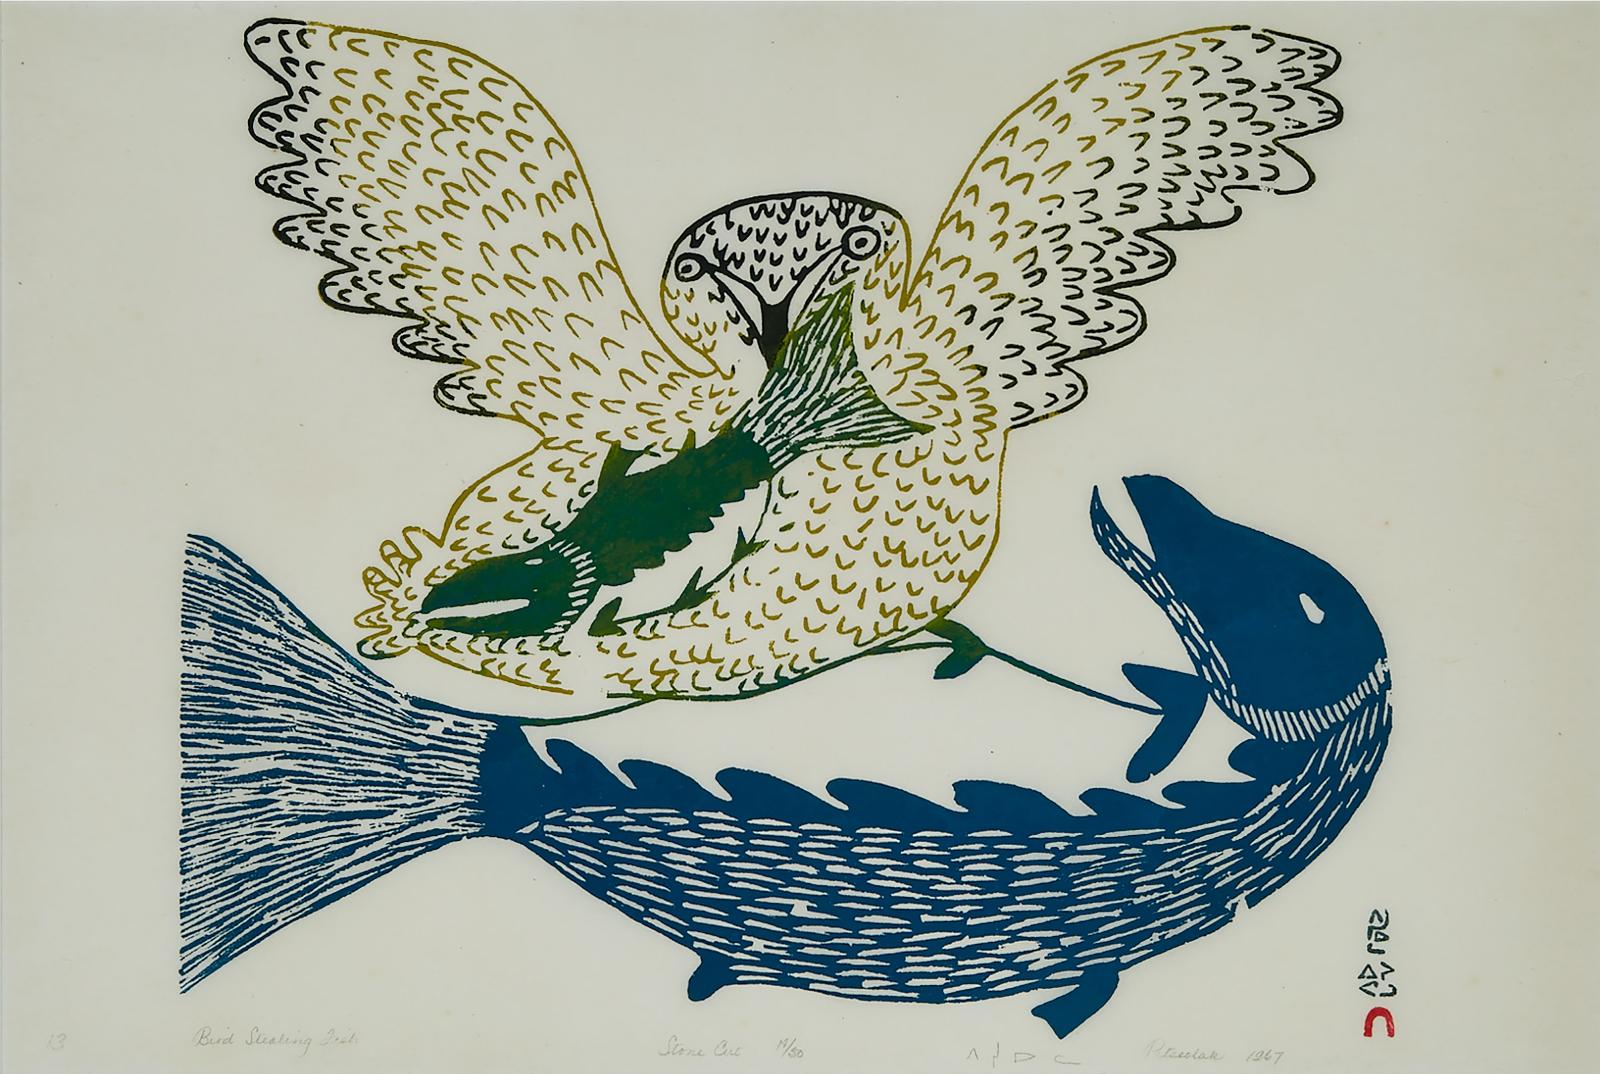 Pitseolak Ashoona (1904-1983) - Bird Stealing Fish